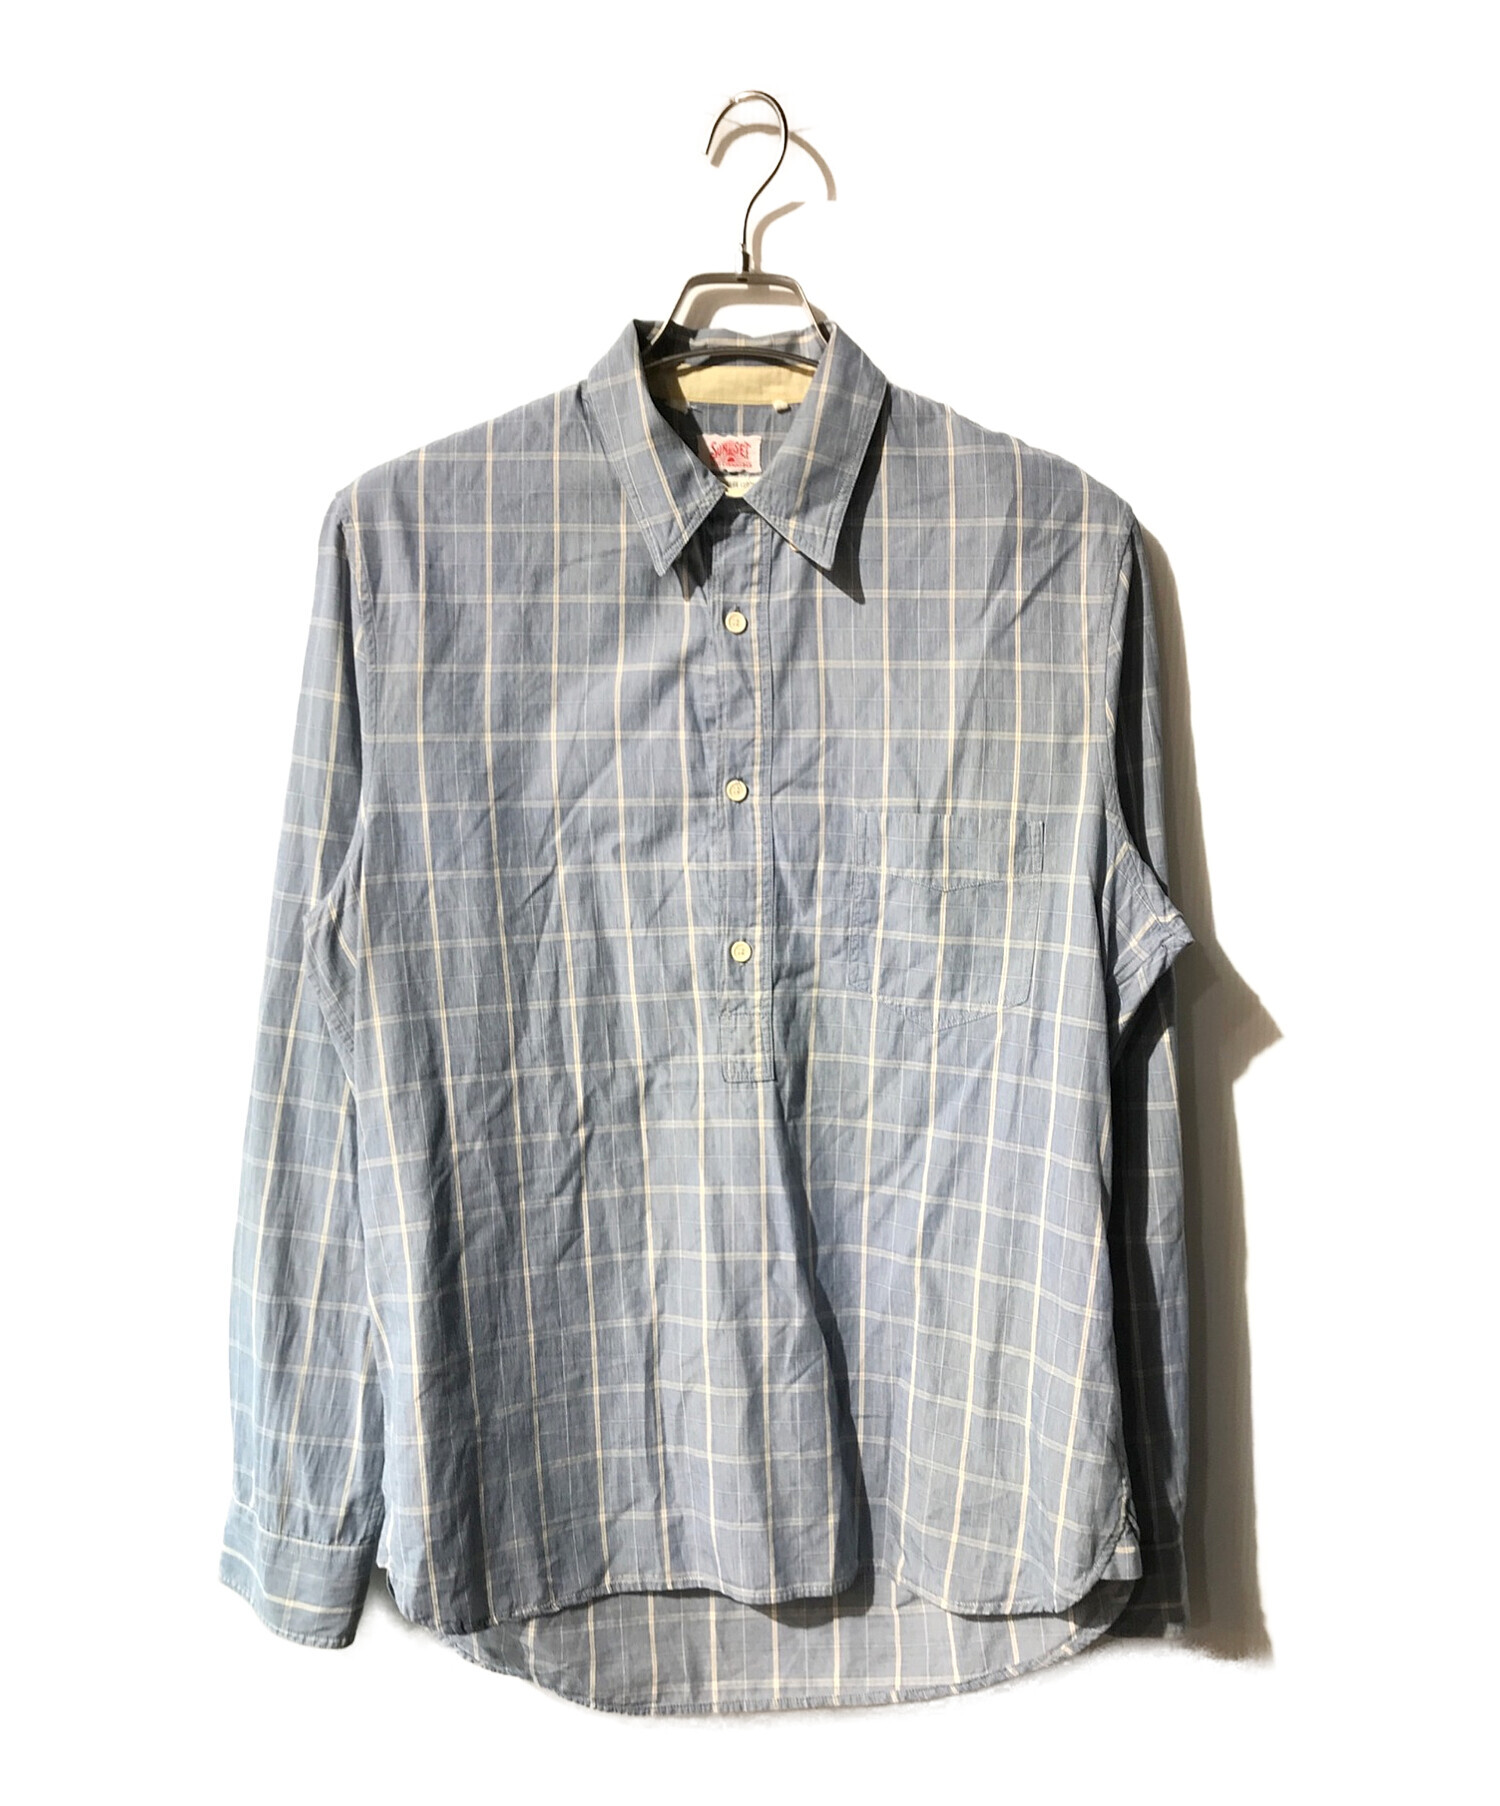 Levi’s vintage clothing LVC チェックシャツ